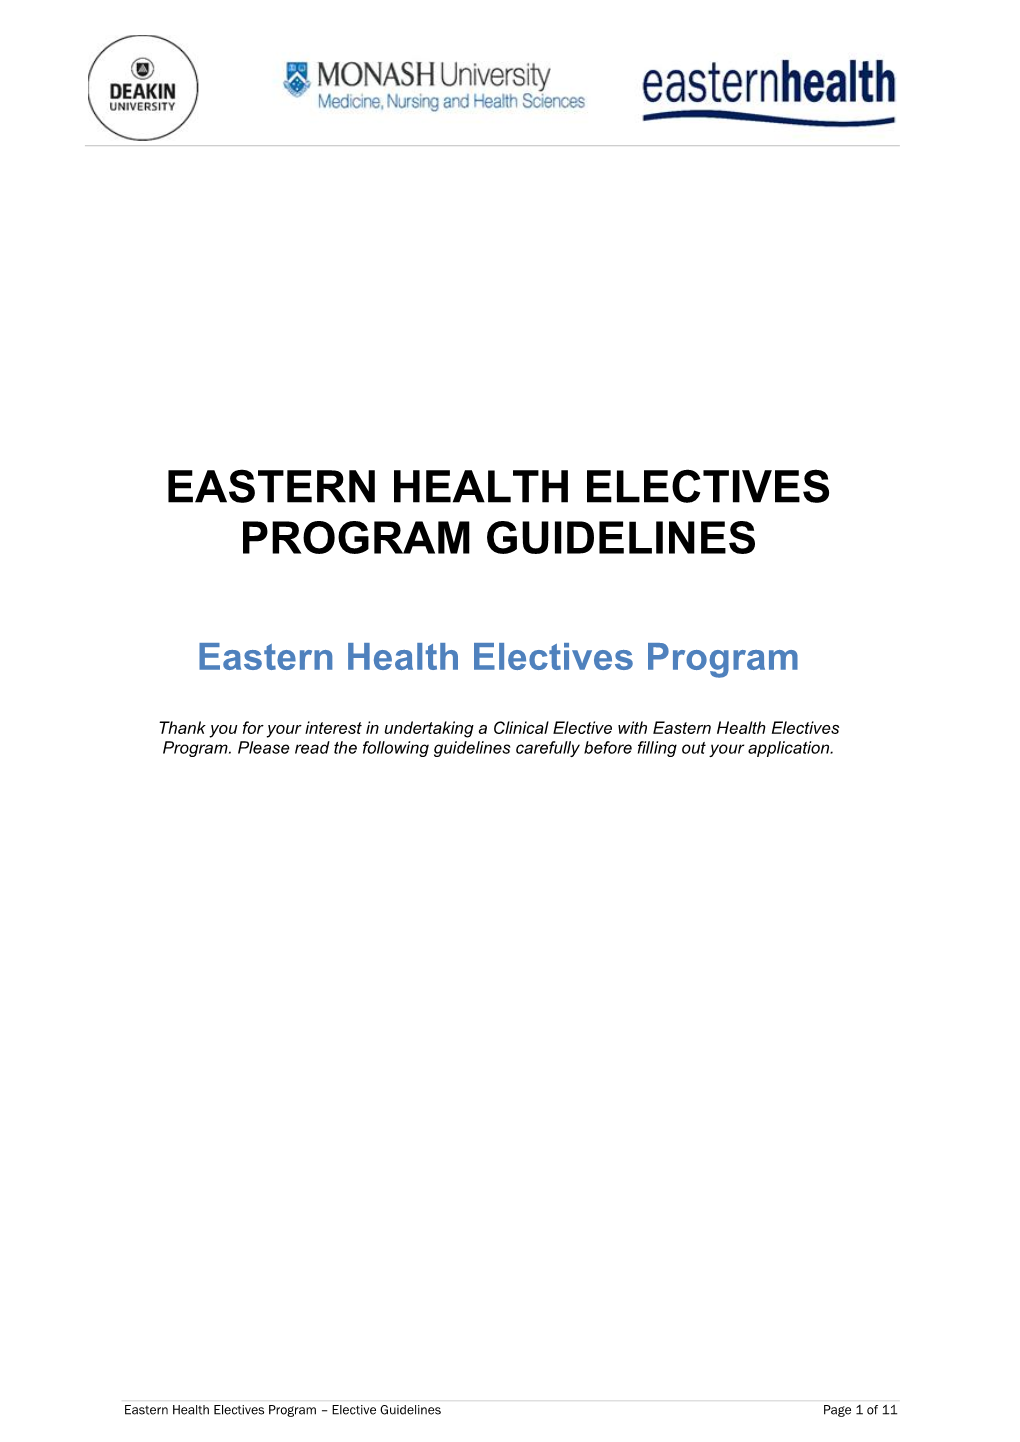 Eastern Health Electives Program Guidelines